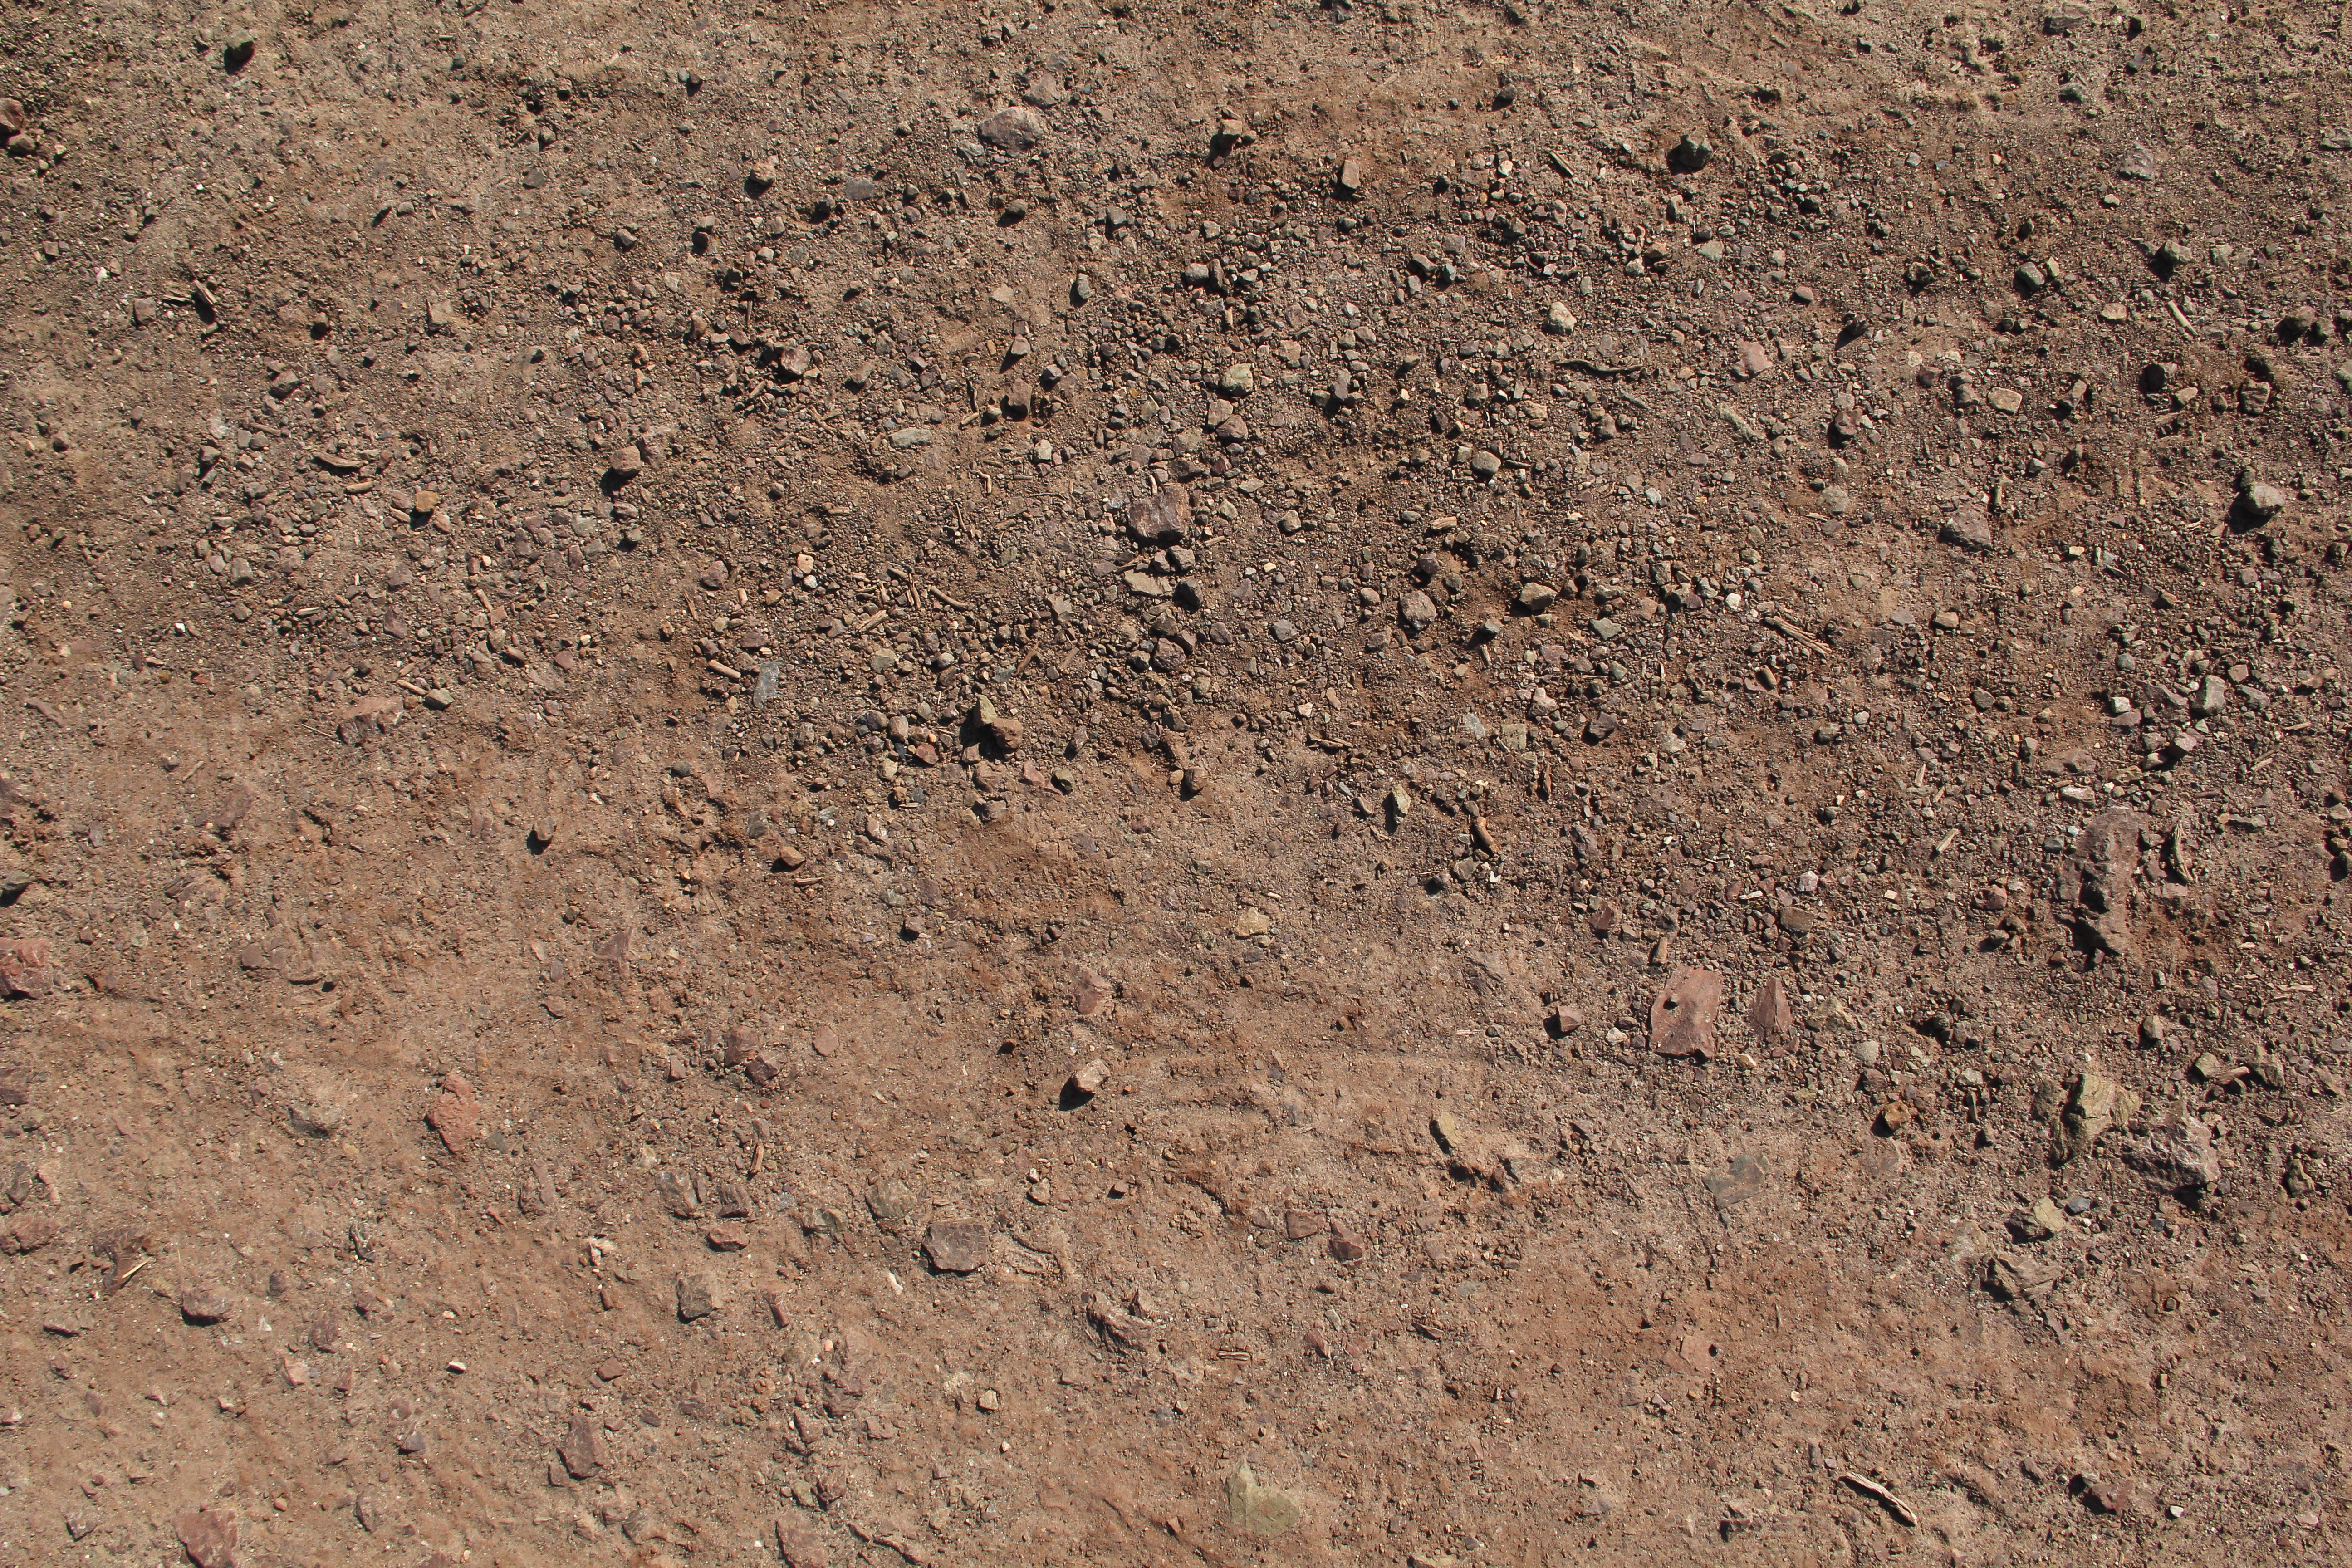 Dirt texture photo